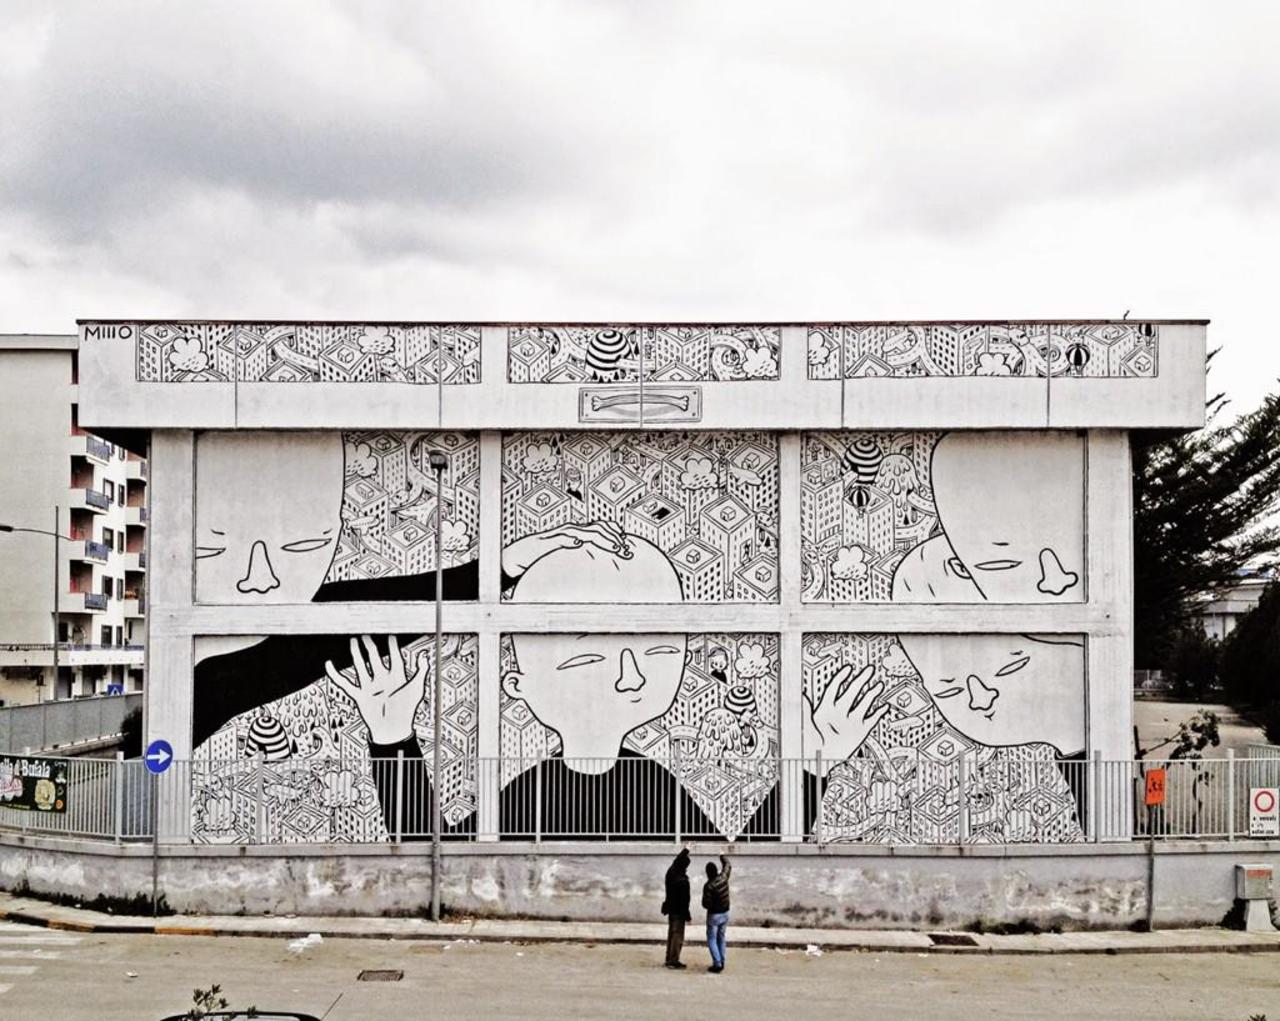 Streetart by Millo on the streets of Battipaglia, Italy

#streetart #urbanart #mural #art #graffiti http://t.co/iKedAsFI87